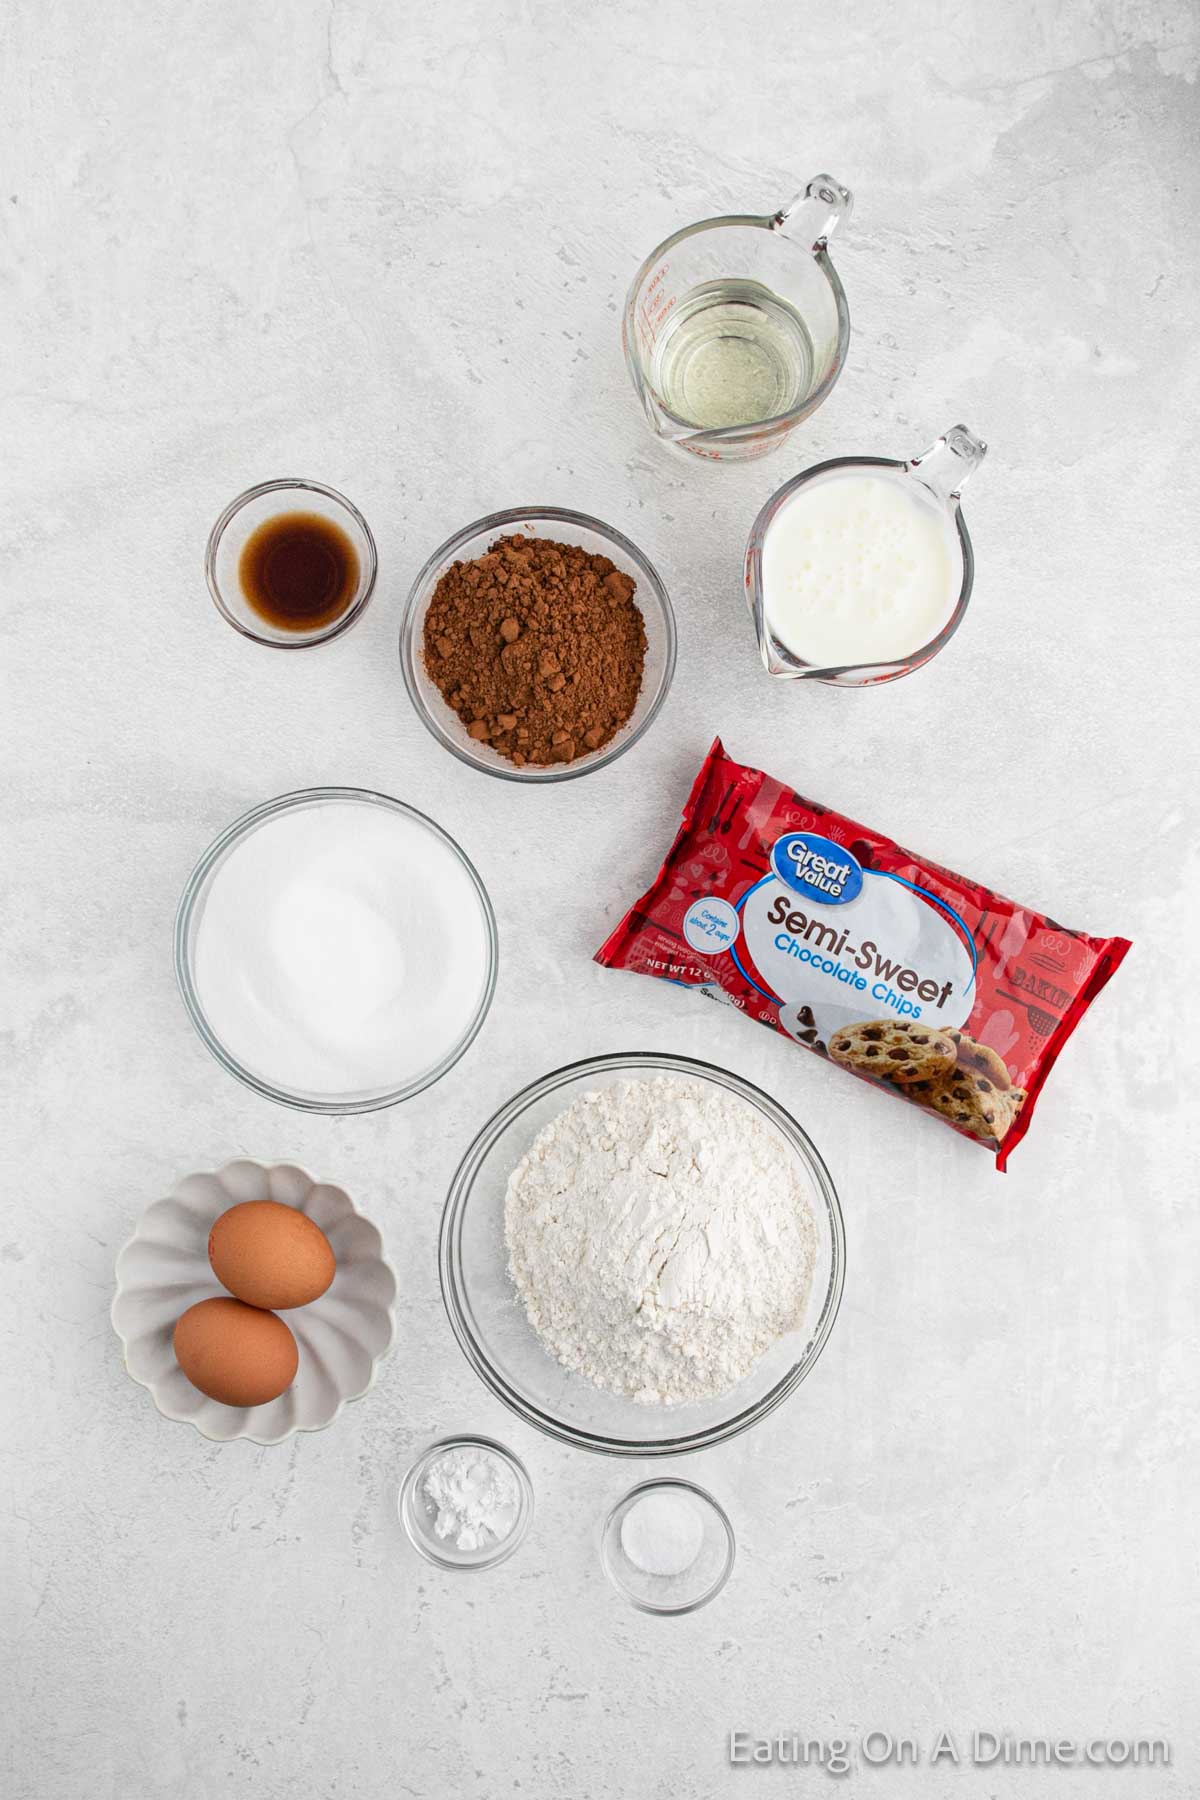 Ingredients - flour, sugar, cocoa powder, salt, baking powder, buttermilk, eggs, vanilla extract, oil, chocolate chips